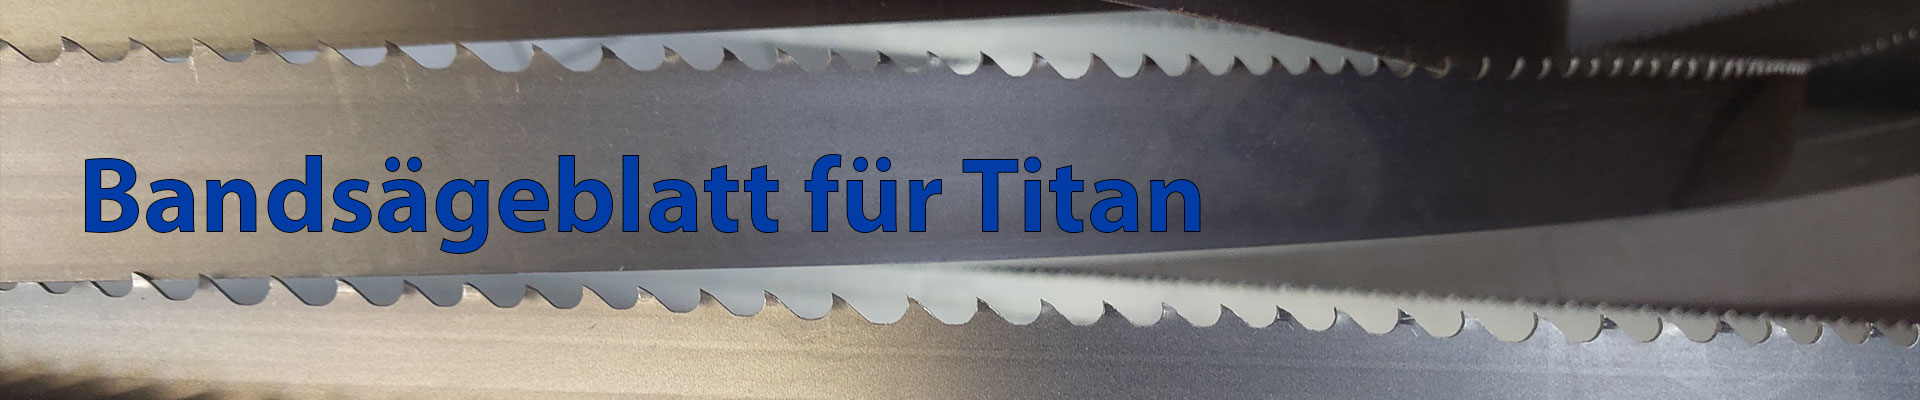 Bandsägeblatt-für-Titan